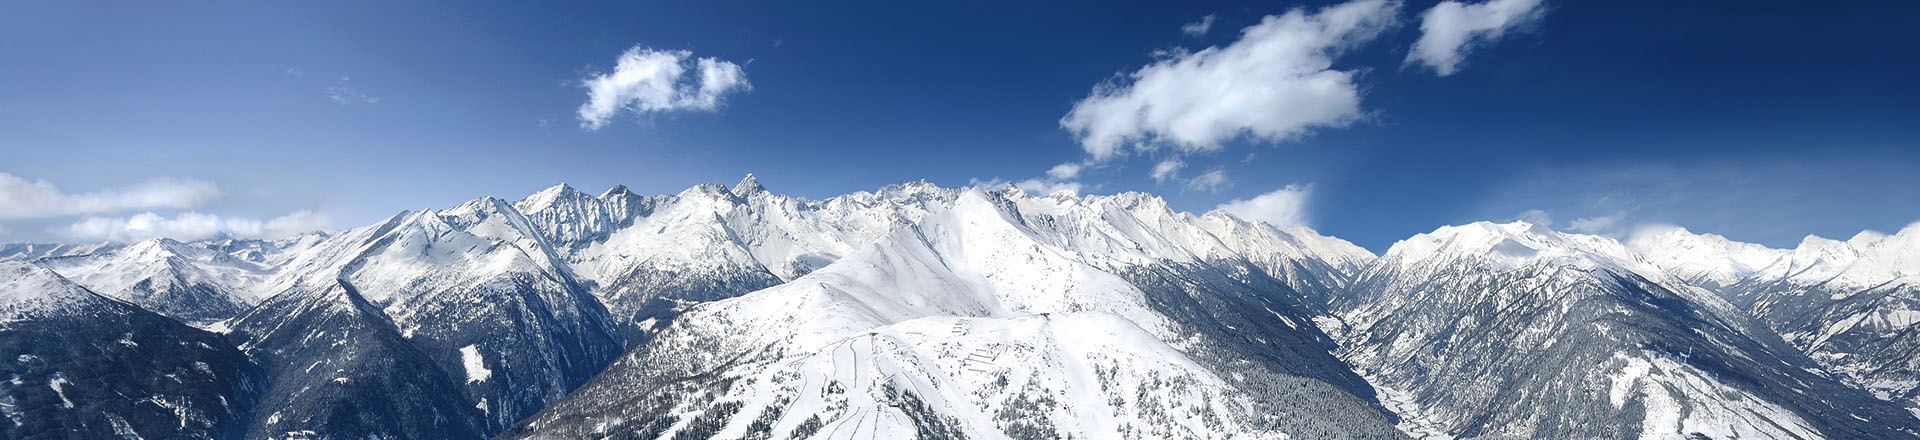 Aerial view of snowy hills & mountains, Falkensteiner Hotels